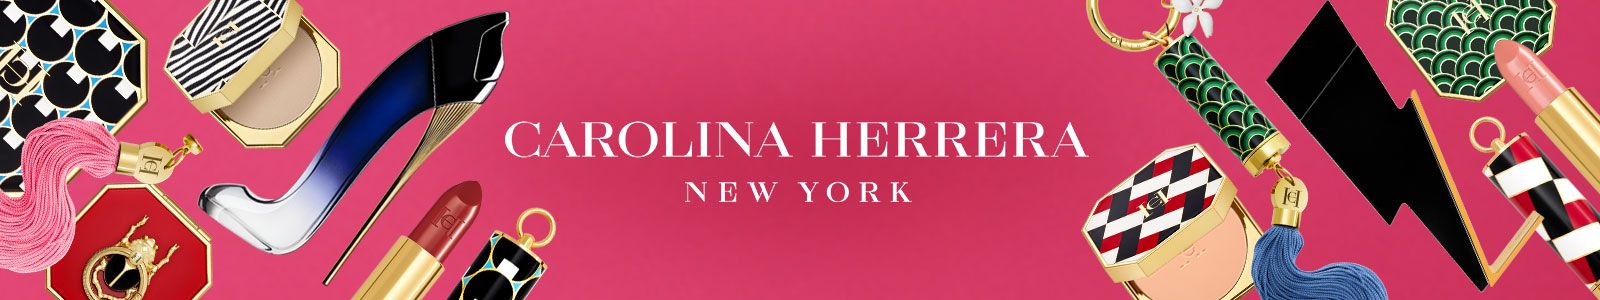 Carolina Herrera, New York